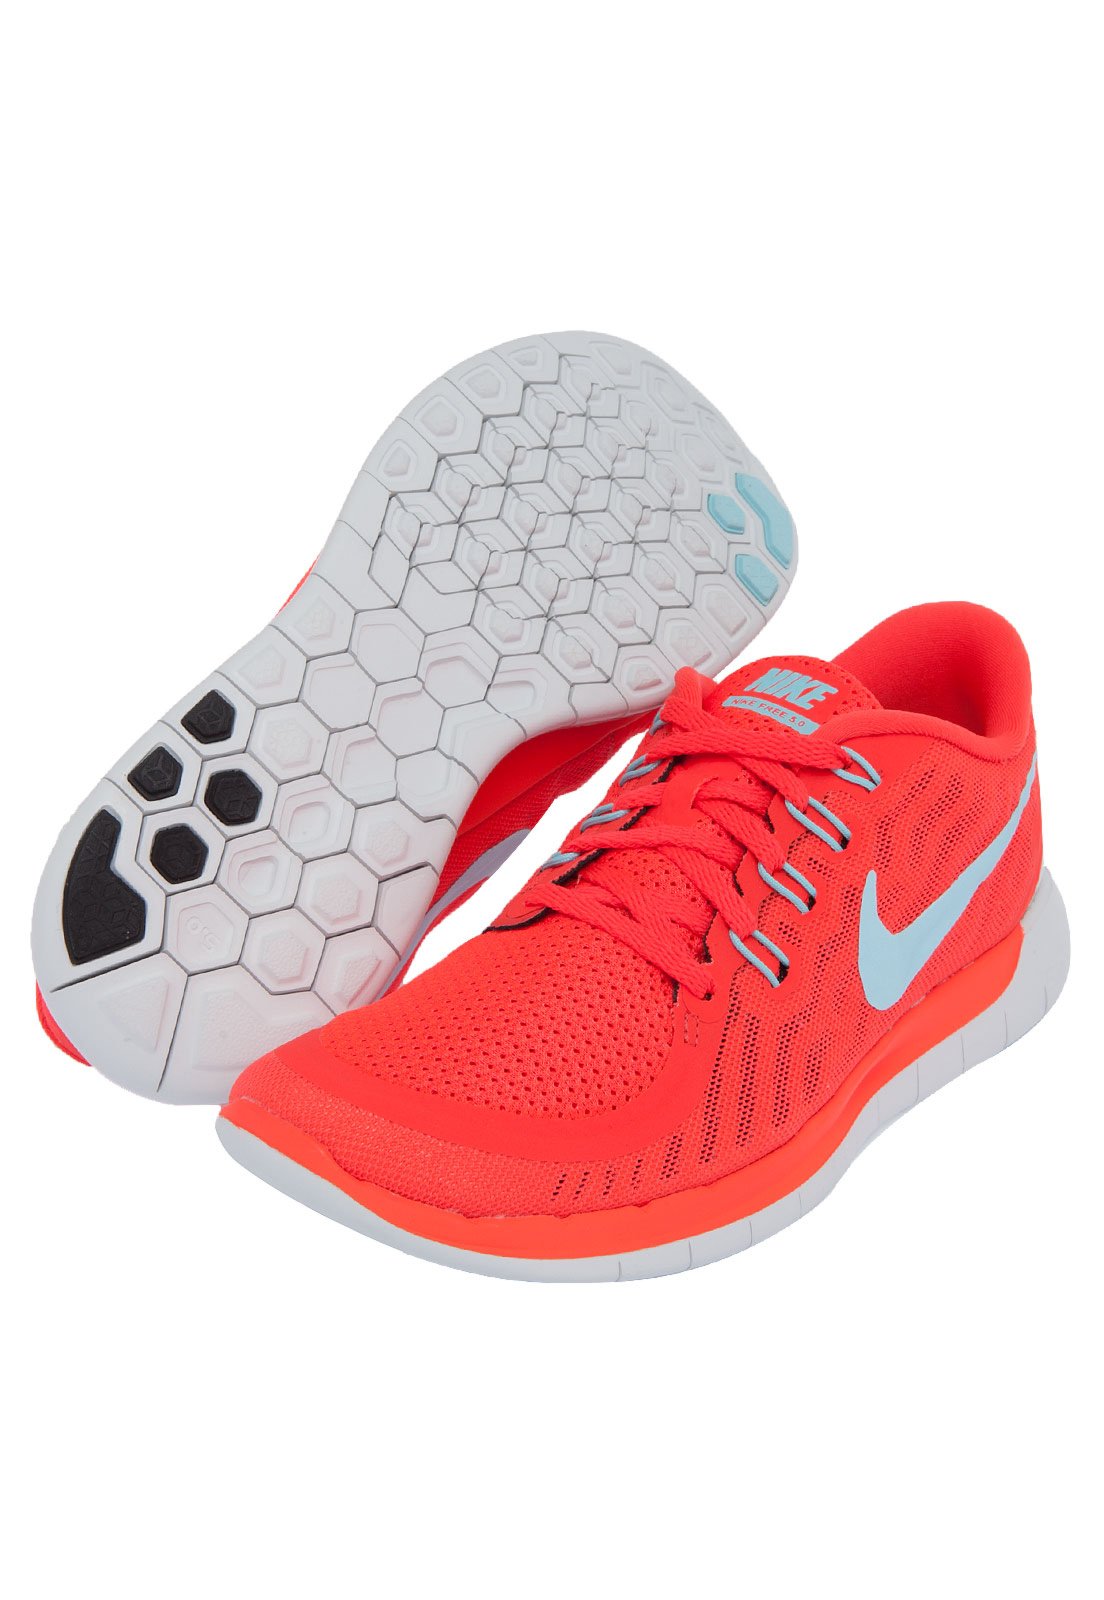 Tênis Nike WMNS Free 5.0 - Compre Agora Kanui